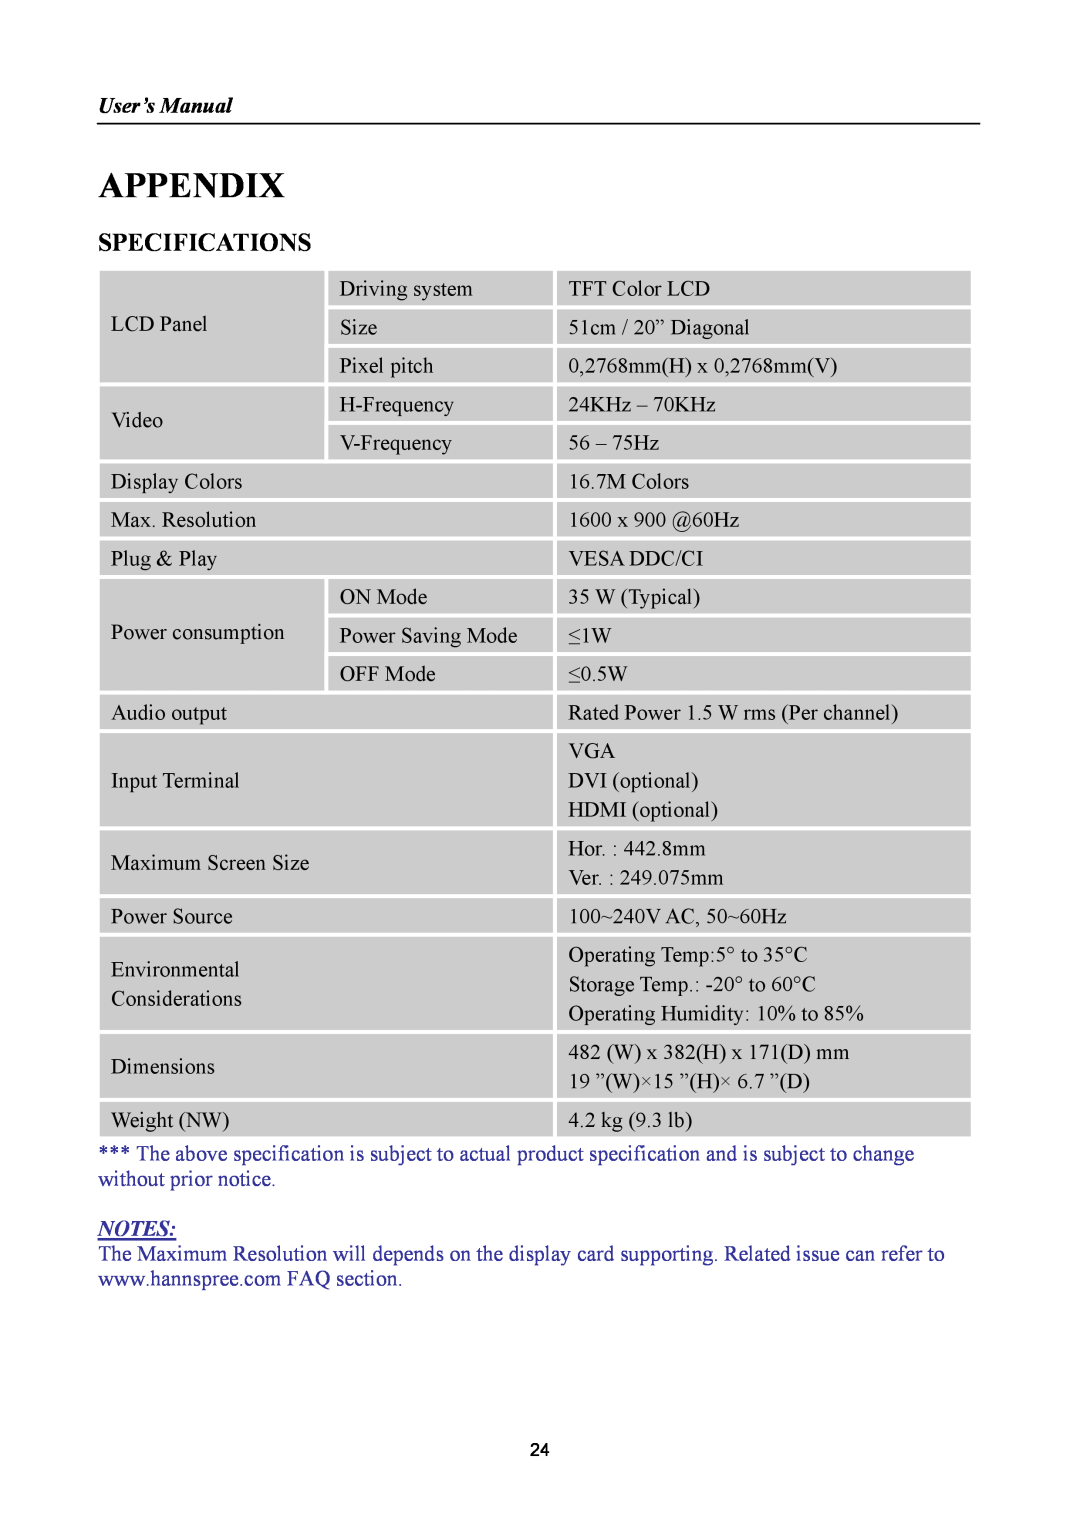 HANNspree HF205 manual Appendix, Specifications, User’s Manual 